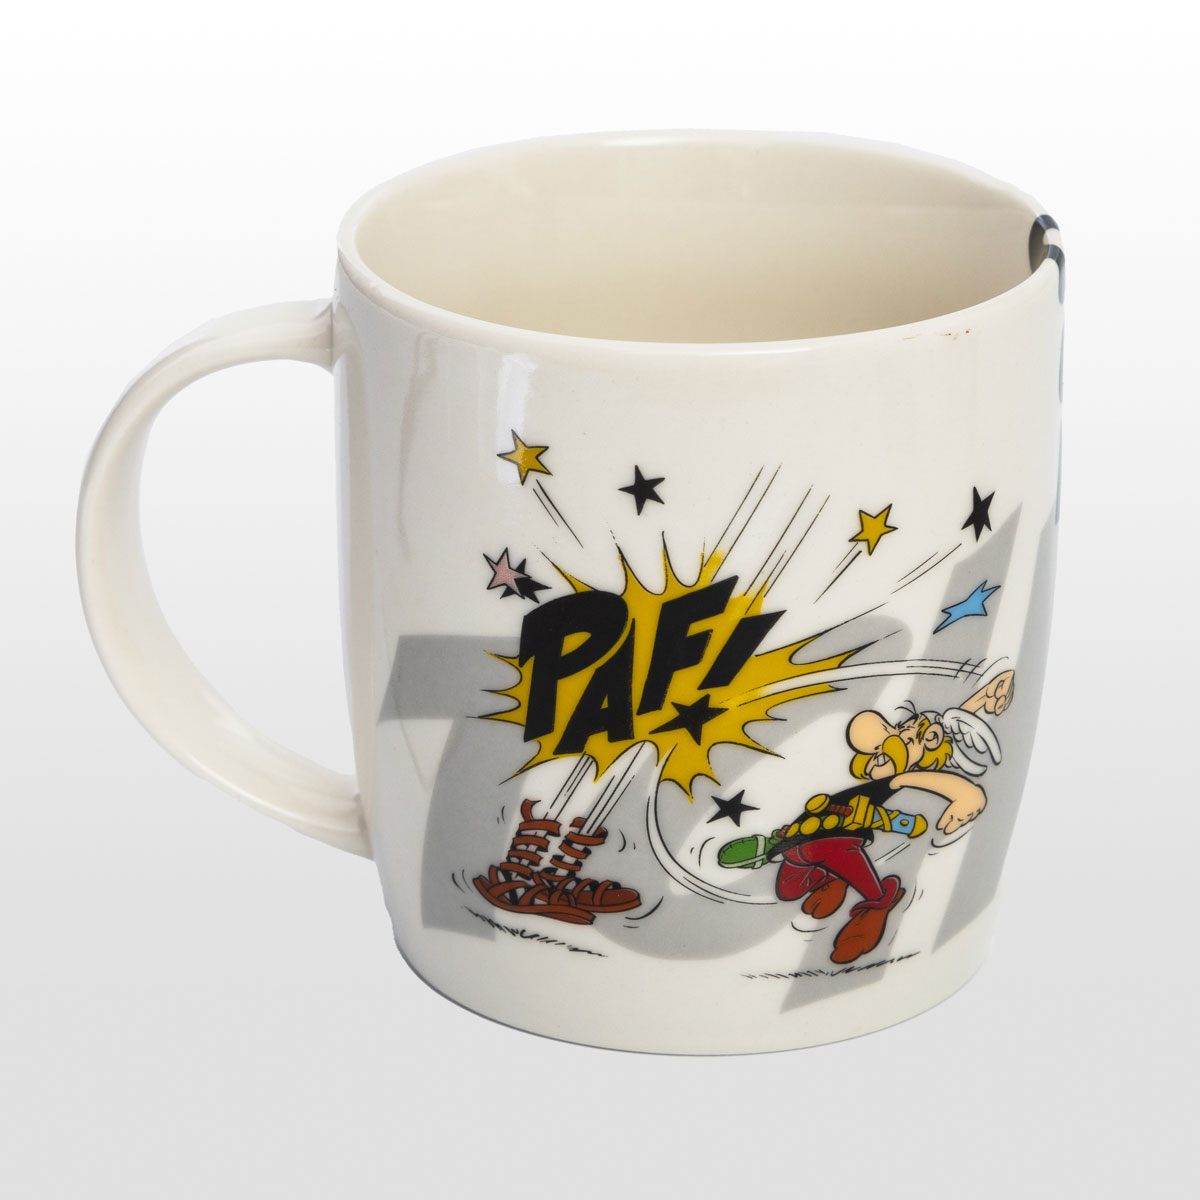 Uderzo mug : Asterix and Obelix : K.O. (detail 2)